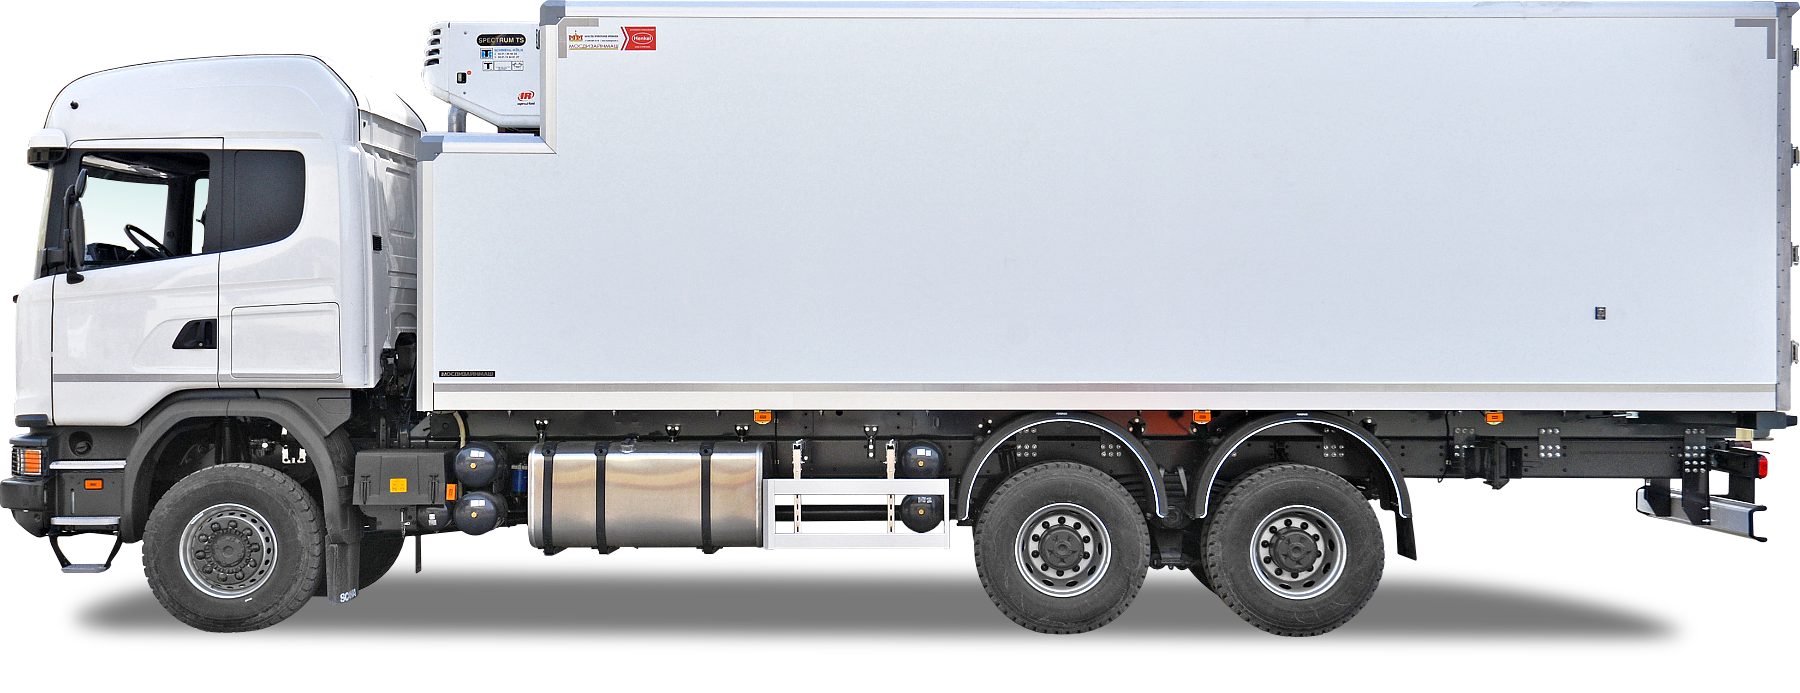 Cold, frozen food truck, trailer, van body FRP laminate Decopan Commercial Vehicle